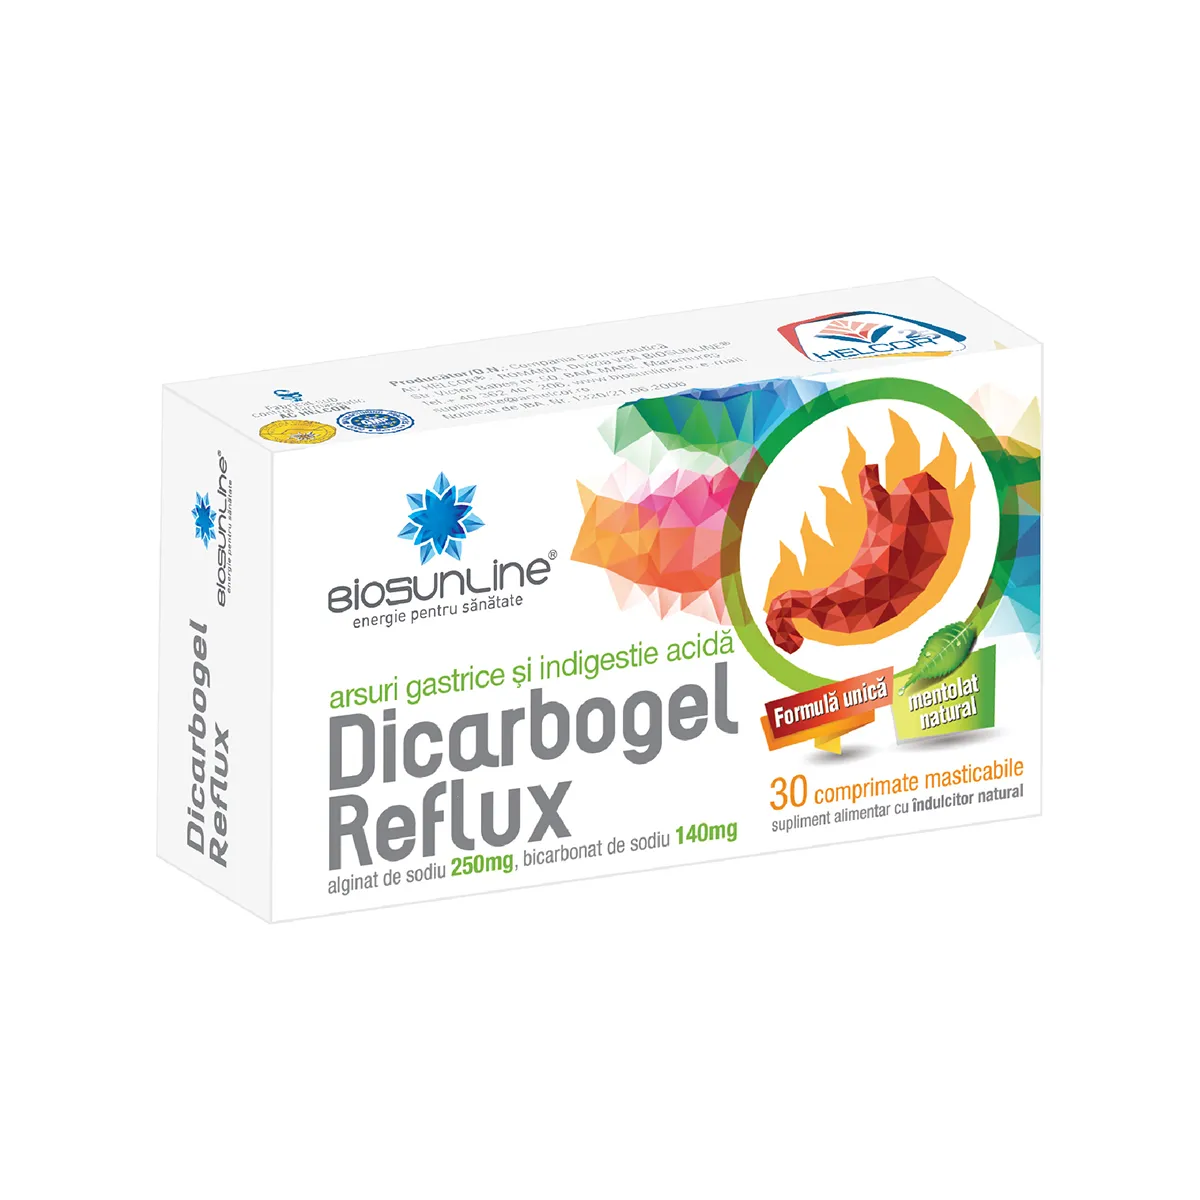 Dicarbogel Reflux, 30 comprimate masticabile, BioSunLine